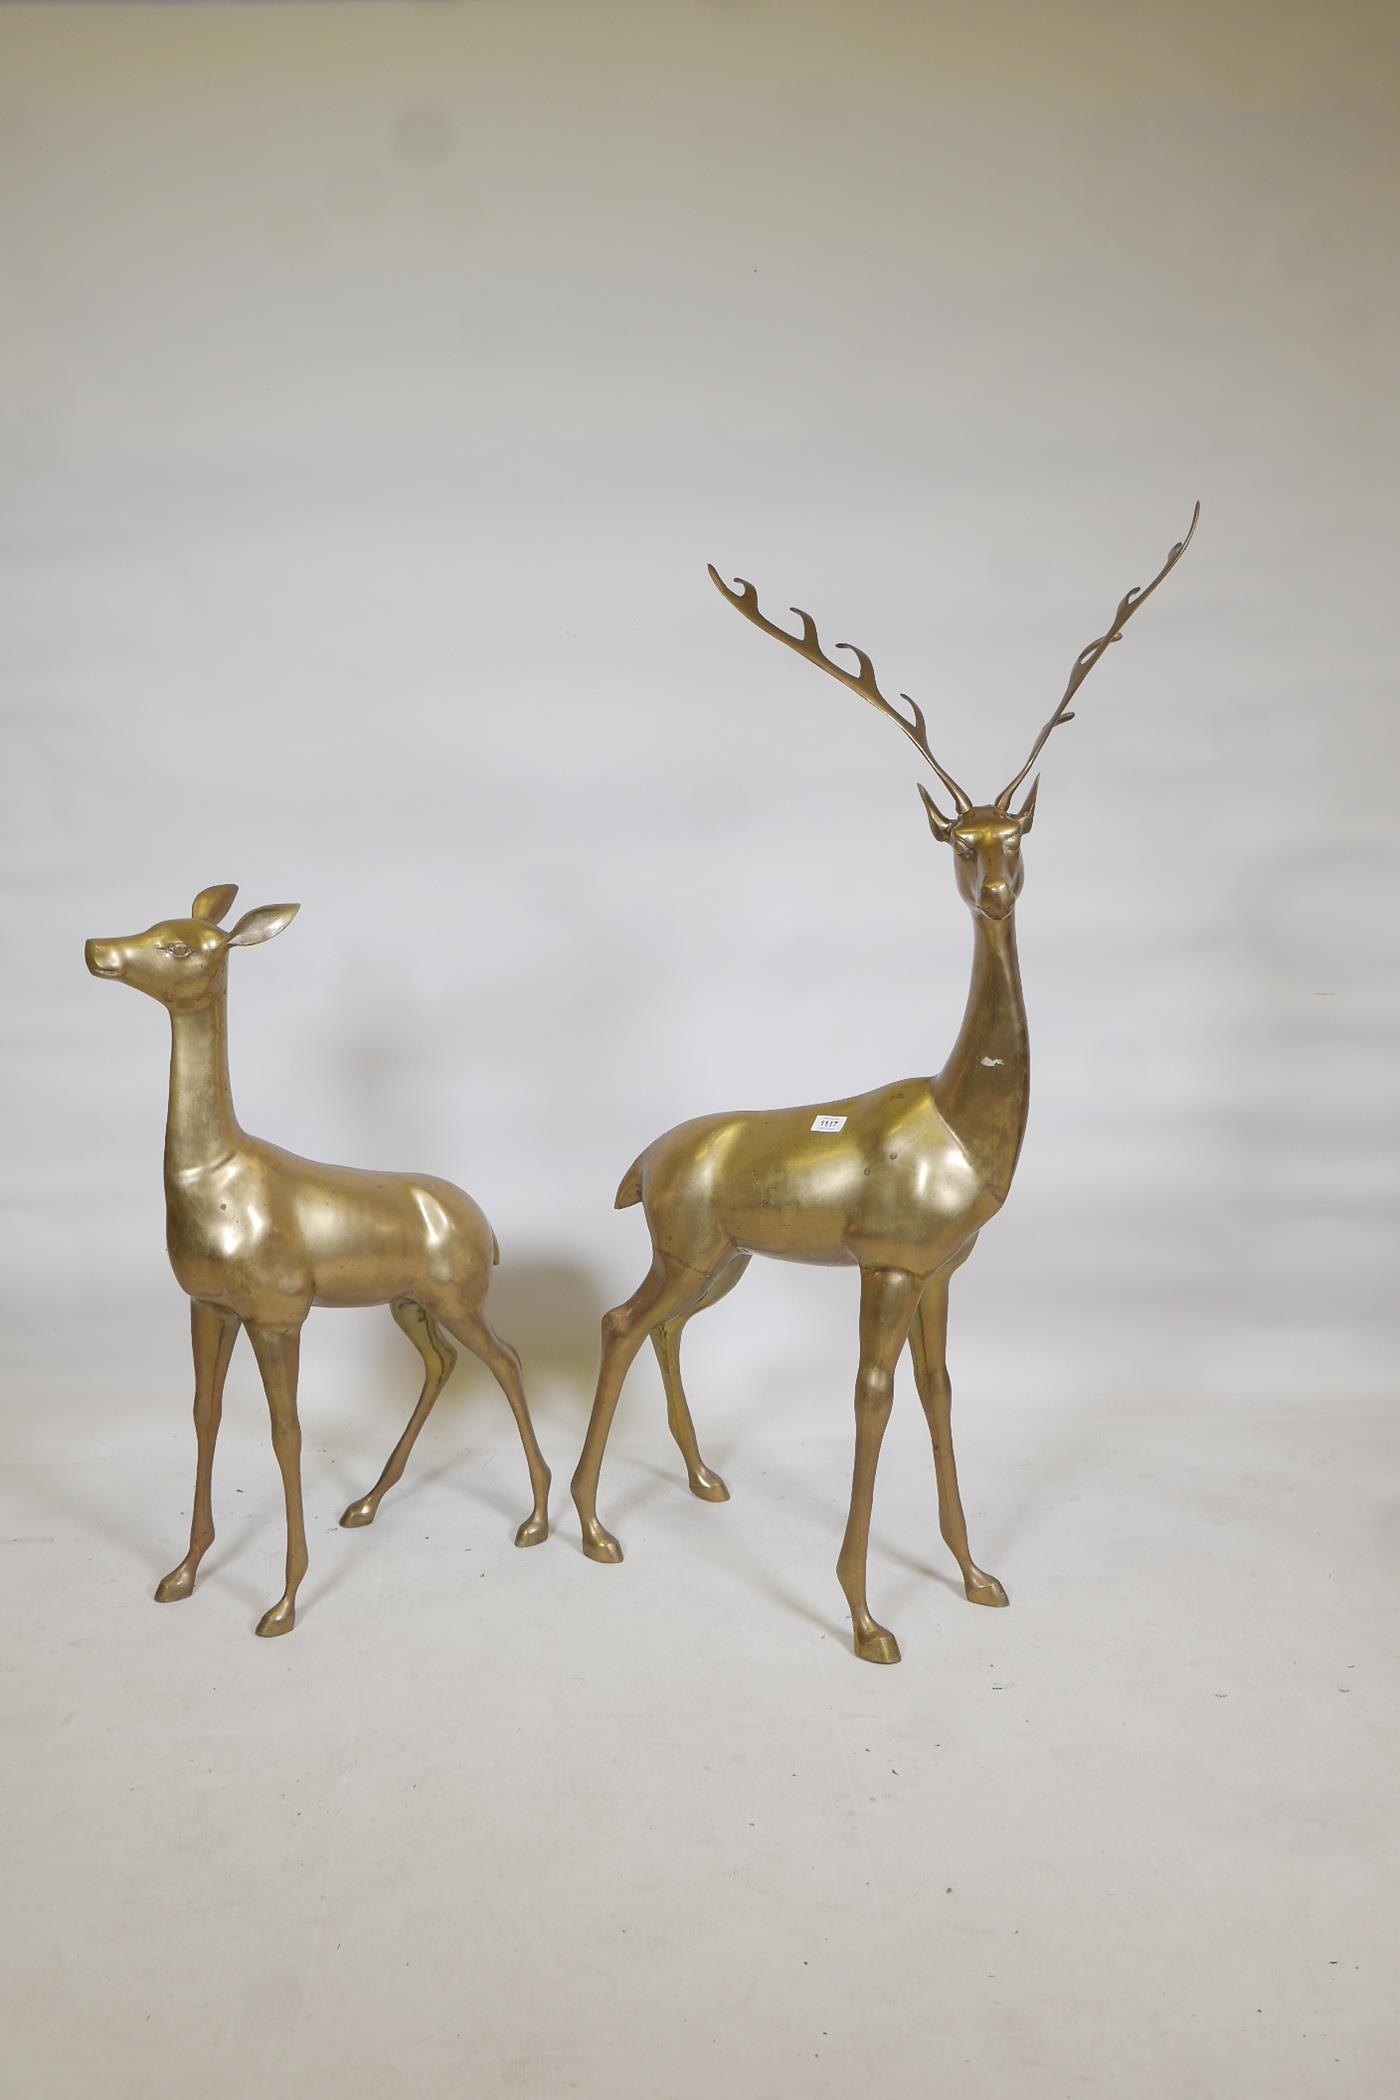 A hollow brass cast model of a buck and roe deer